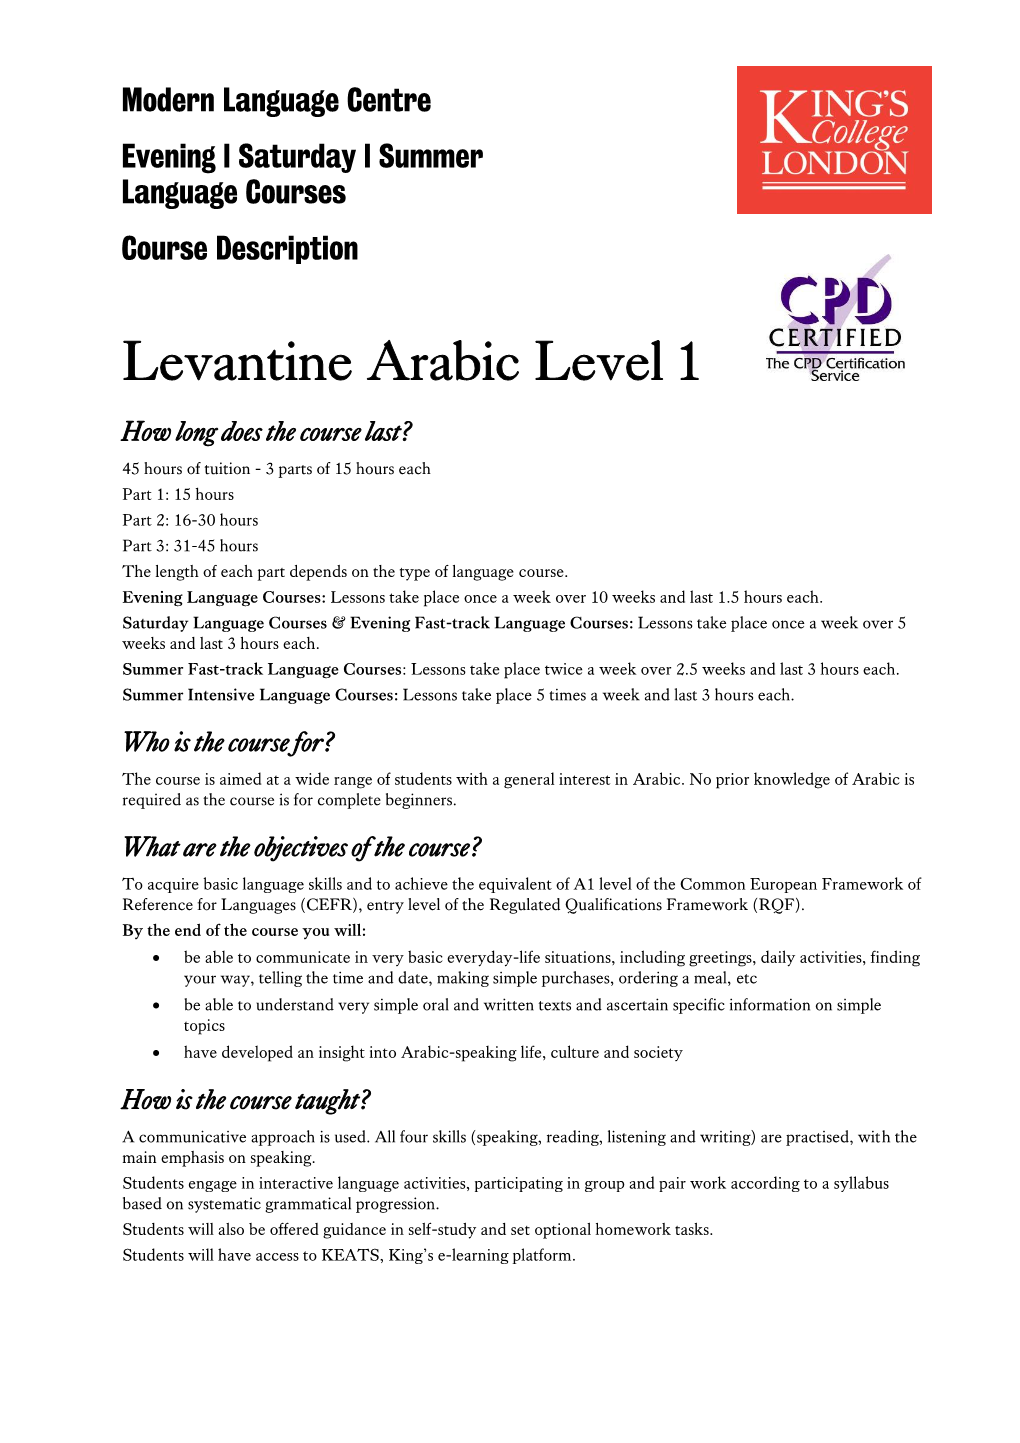 Levantine Arabic Level 1